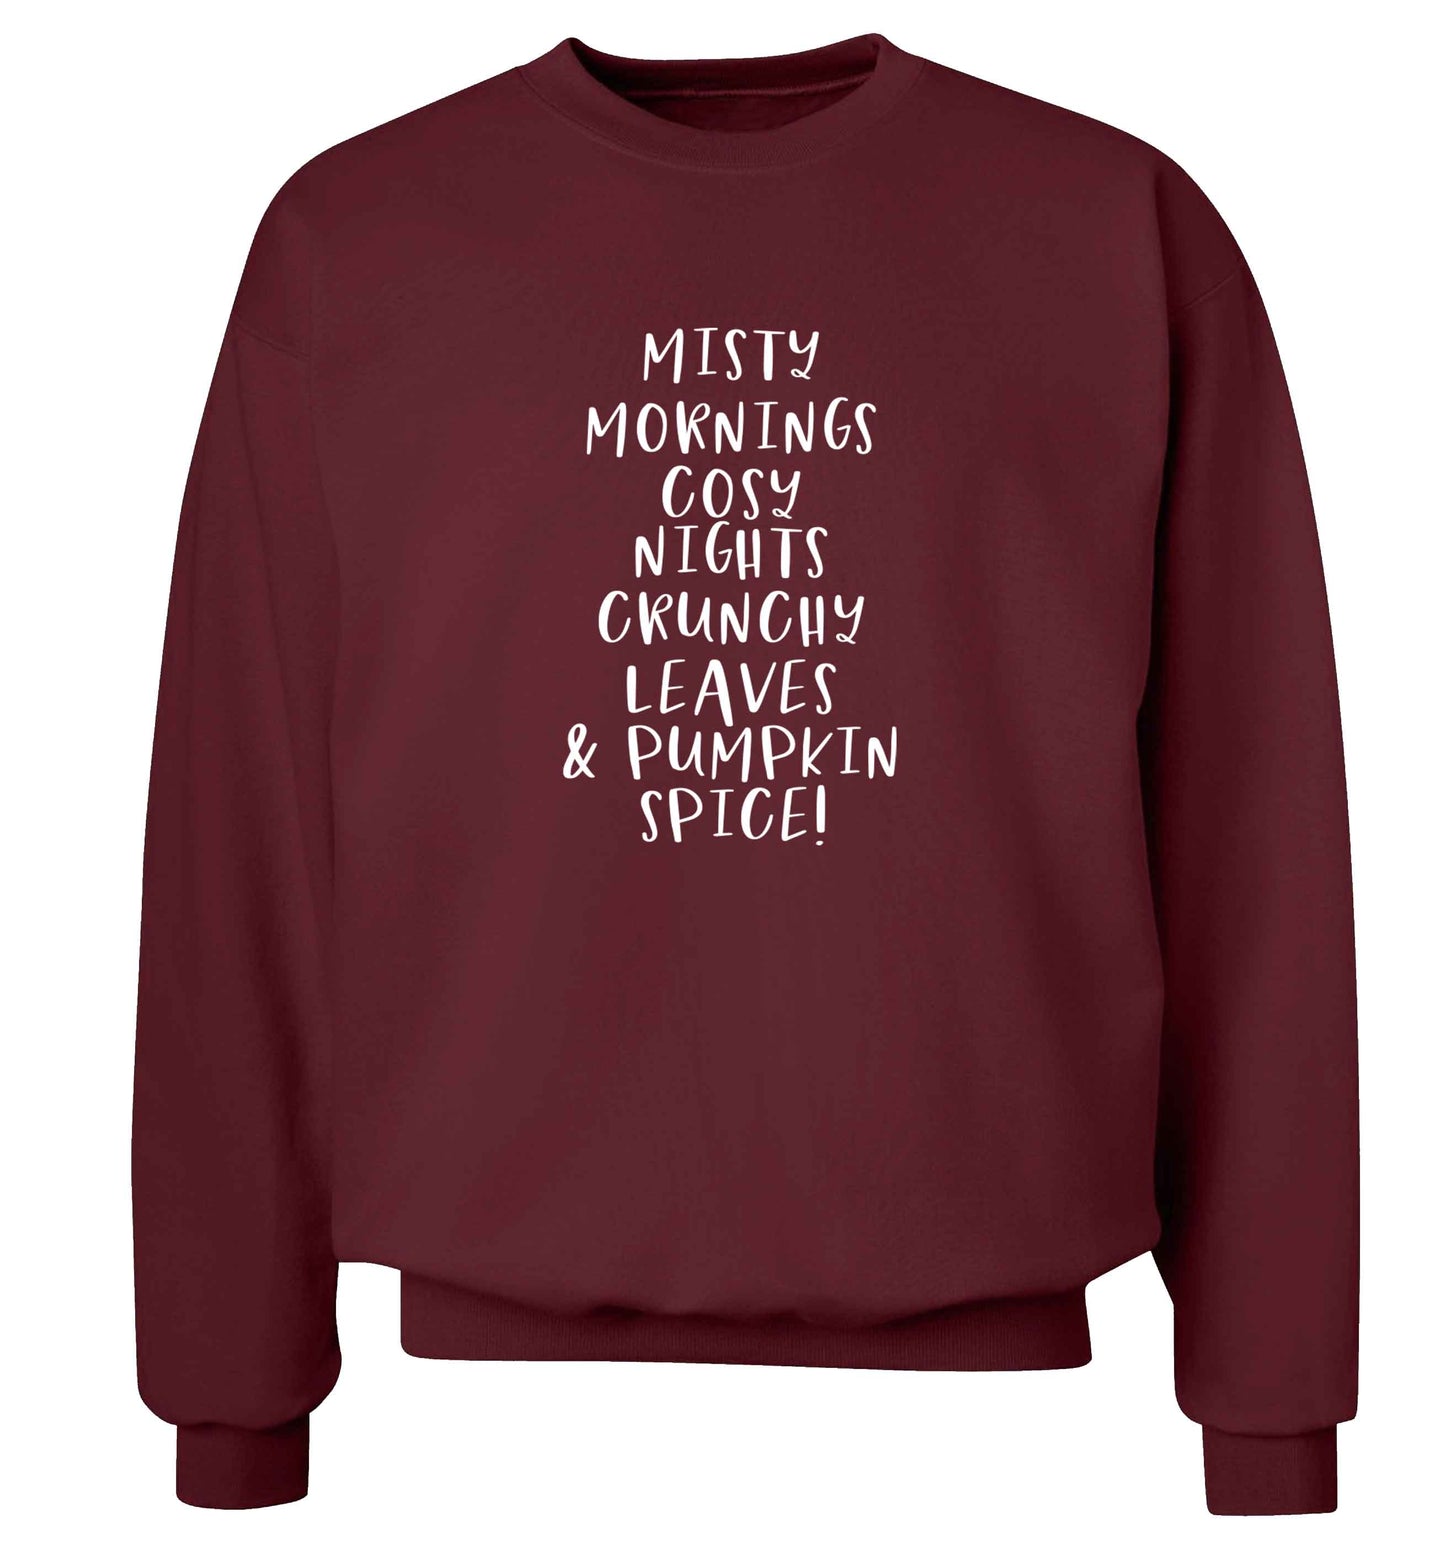 Misty Mornings adult's unisex maroon sweater 2XL